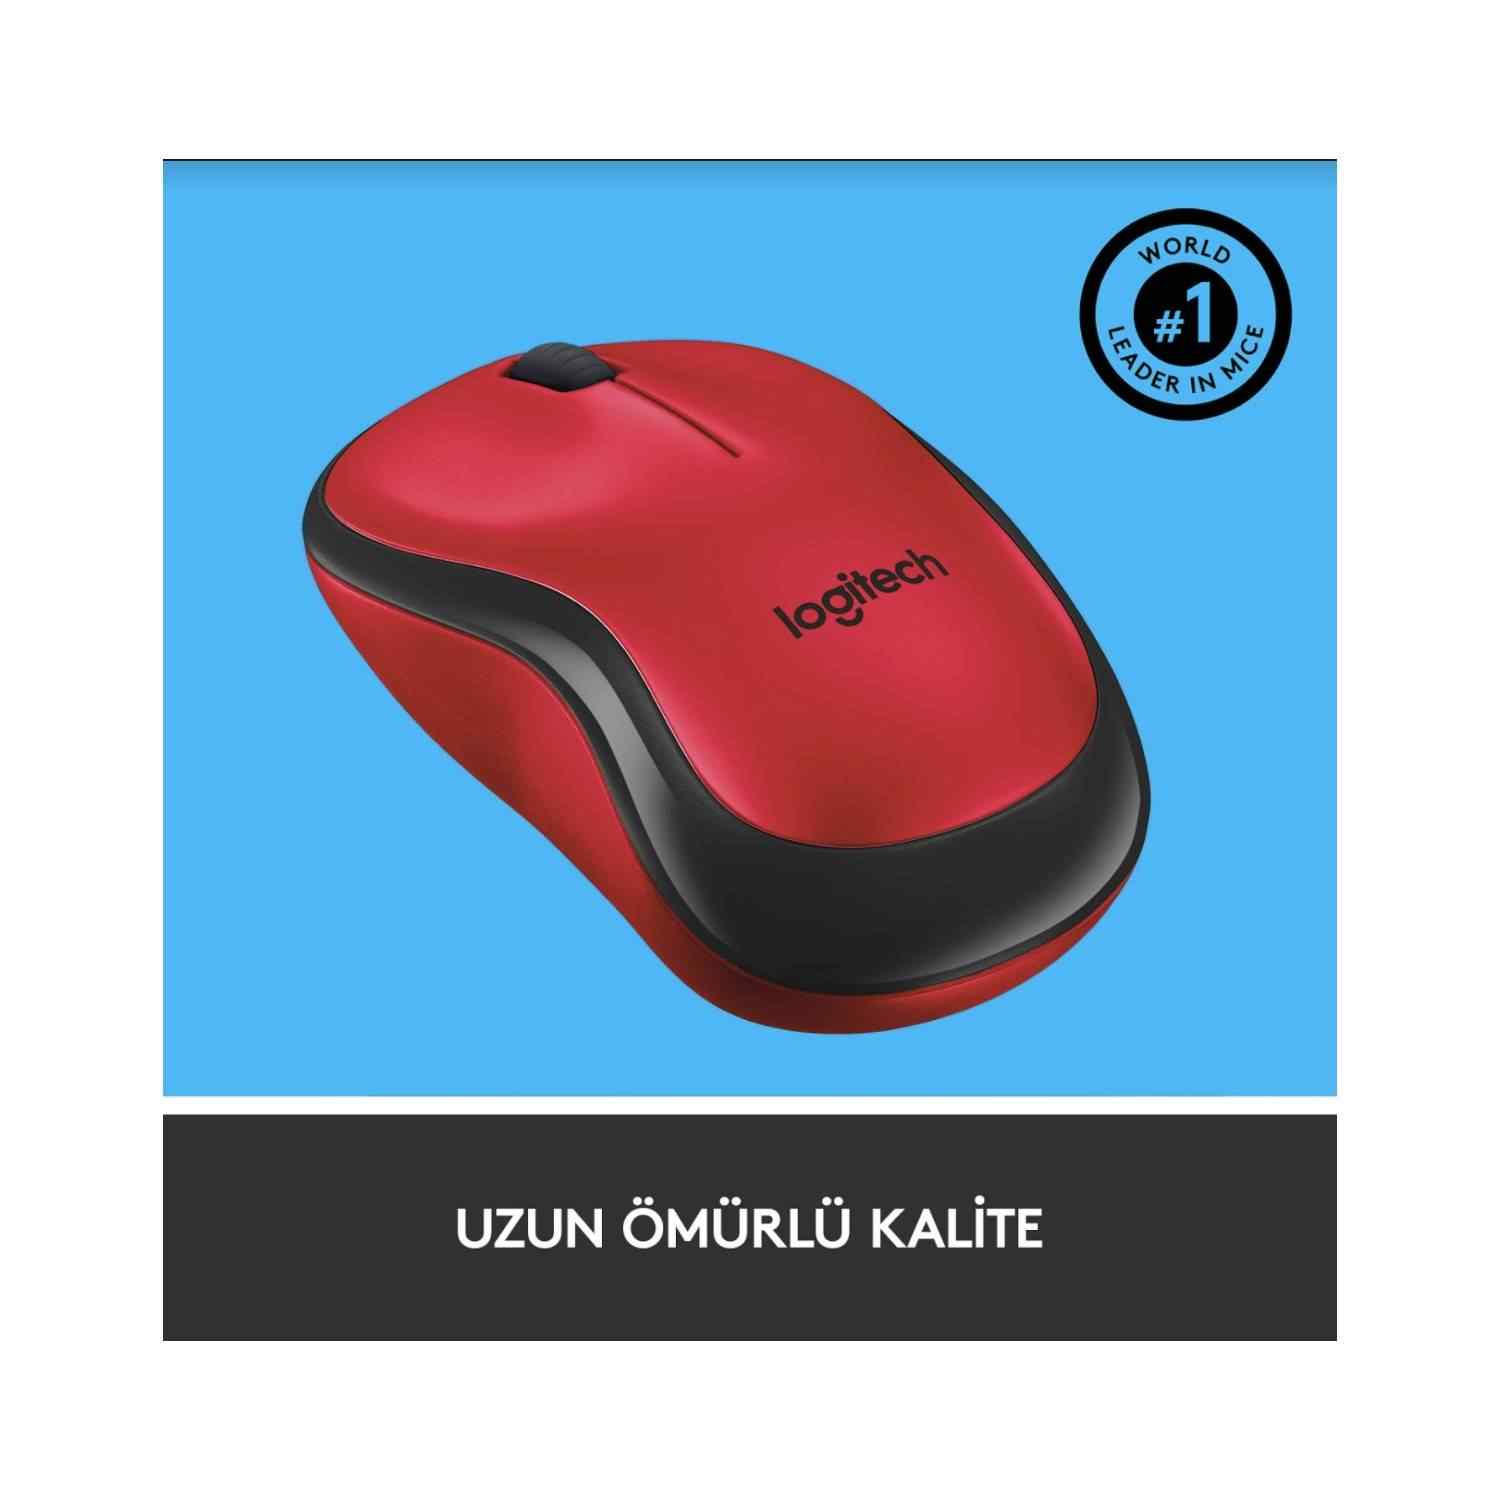 Logitech M220 Sessiz Kompakt Wireless Kablosuz Mouse